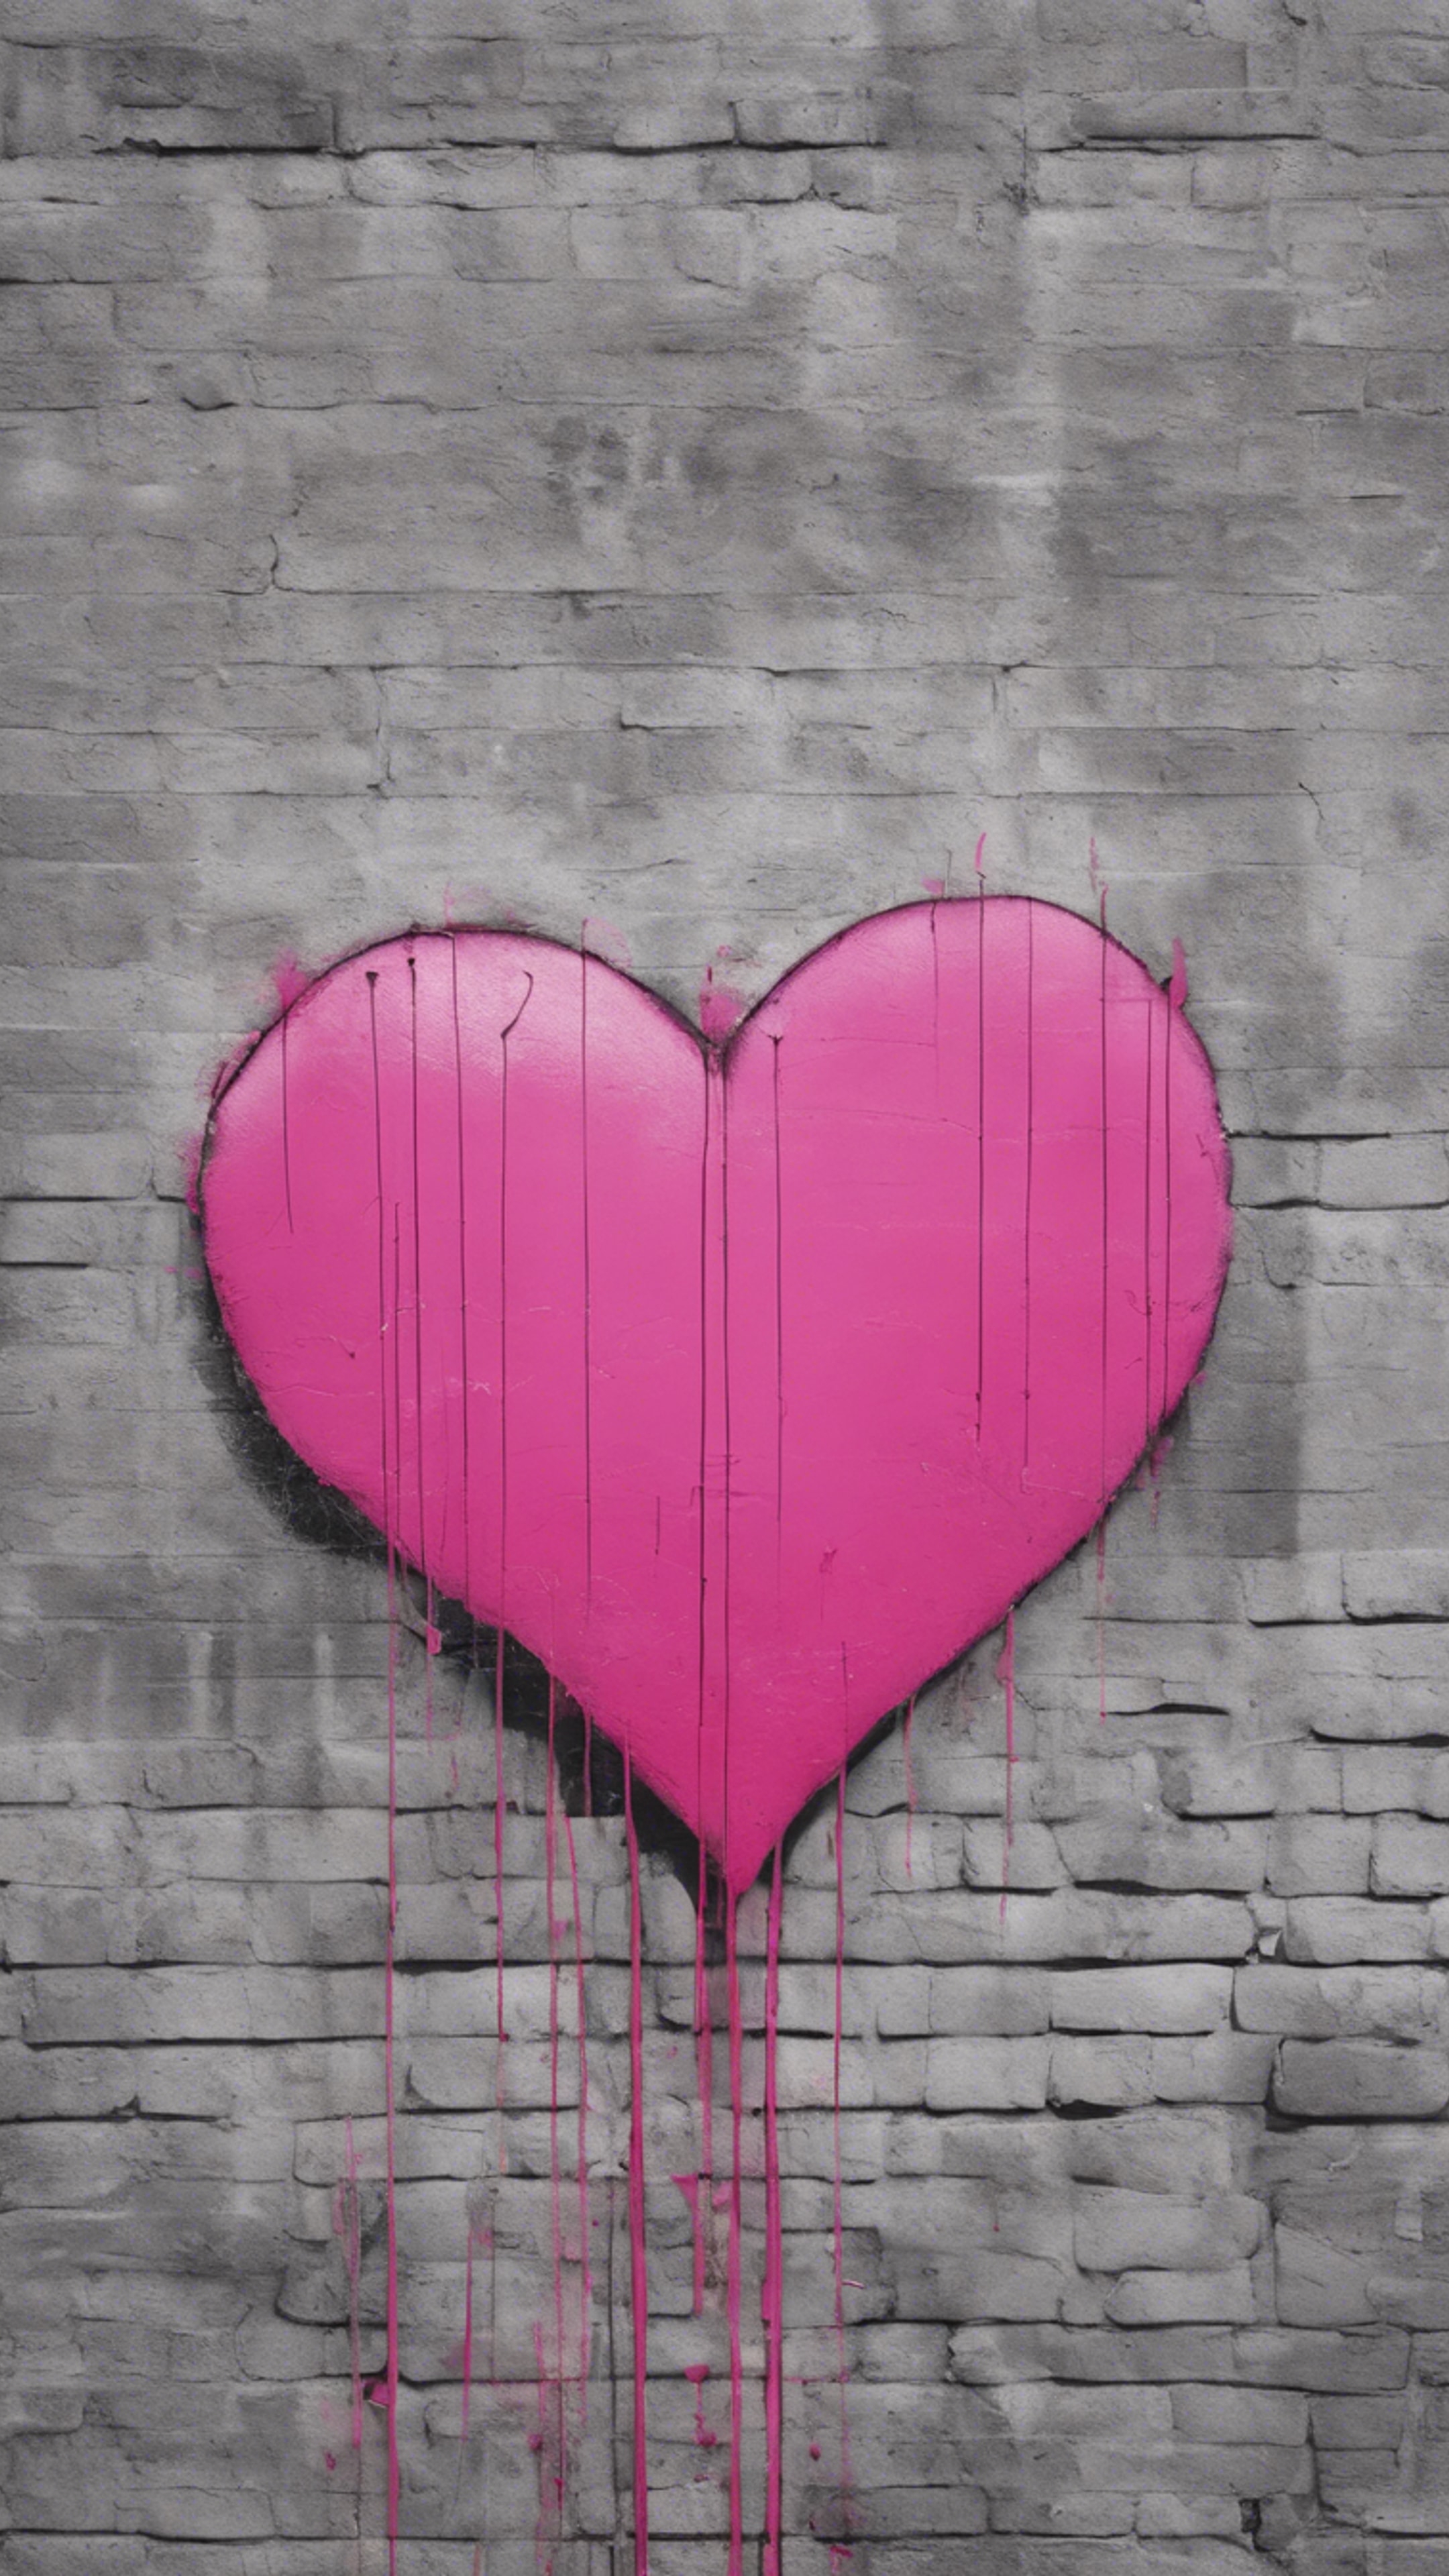 A minimalist pink heart graffiti spray painted on a city wall.壁紙[fd4dbafbb65a4217be27]